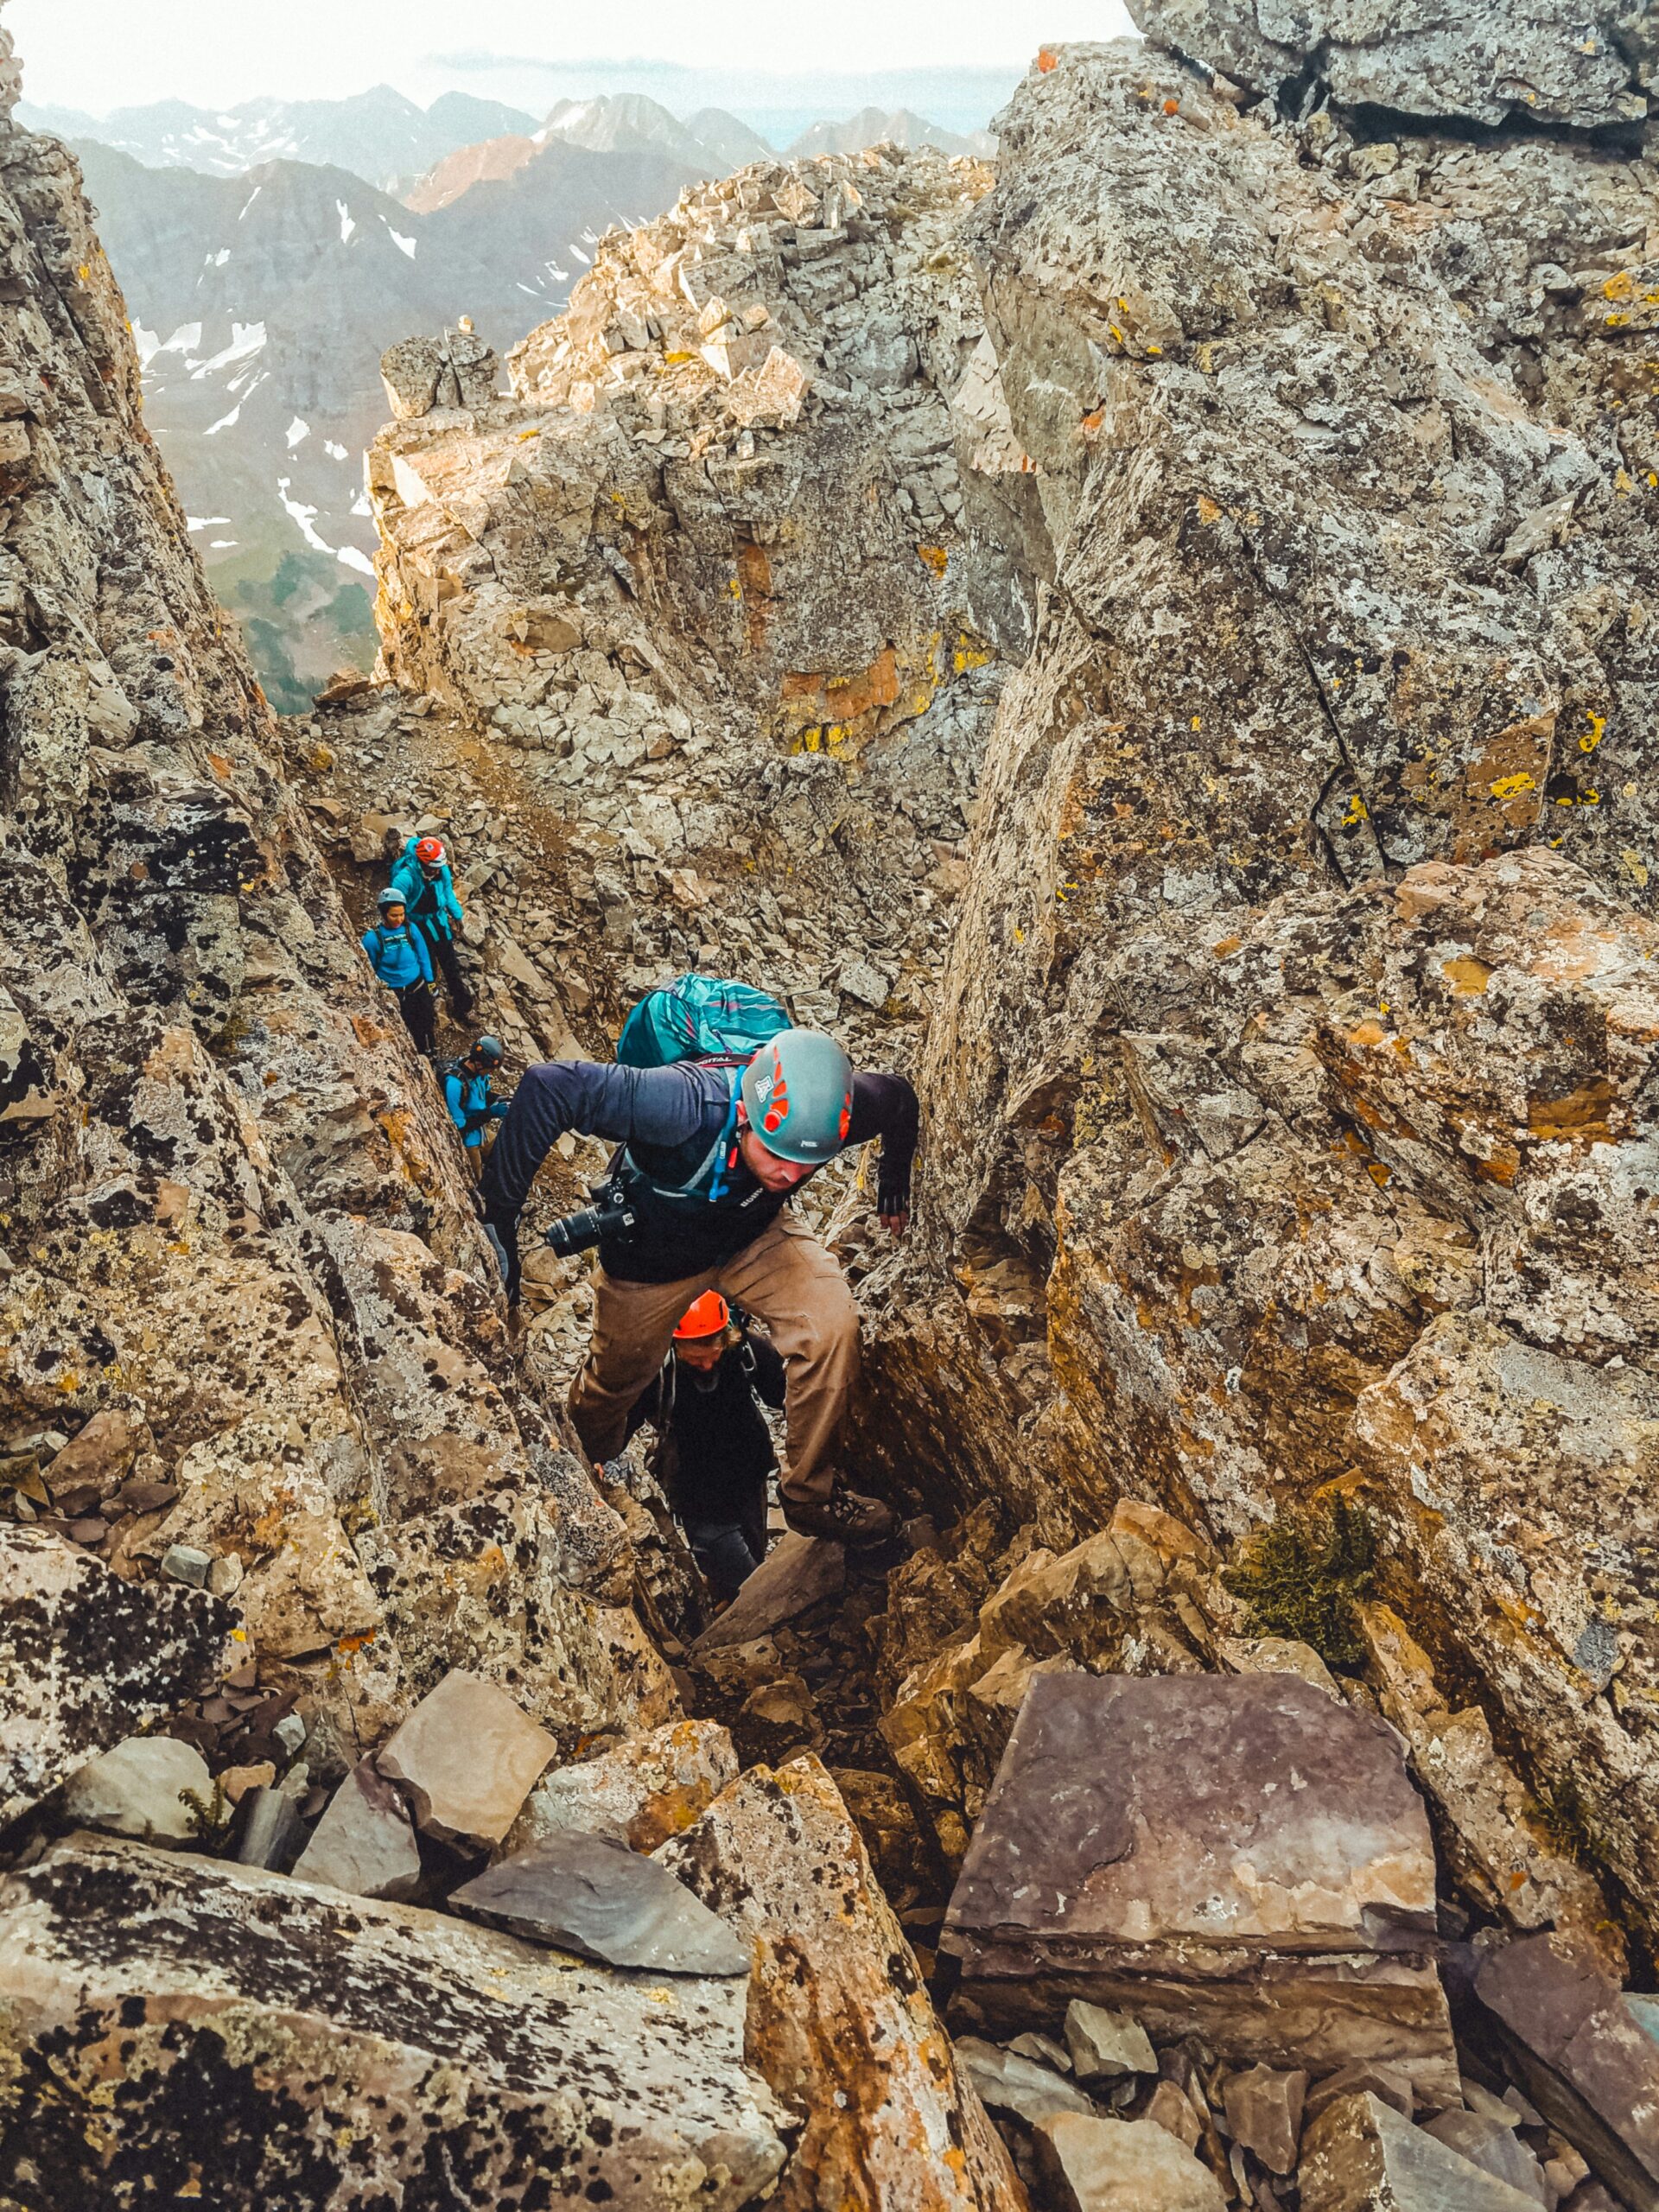 Can I Hike Mount Shasta Alone?